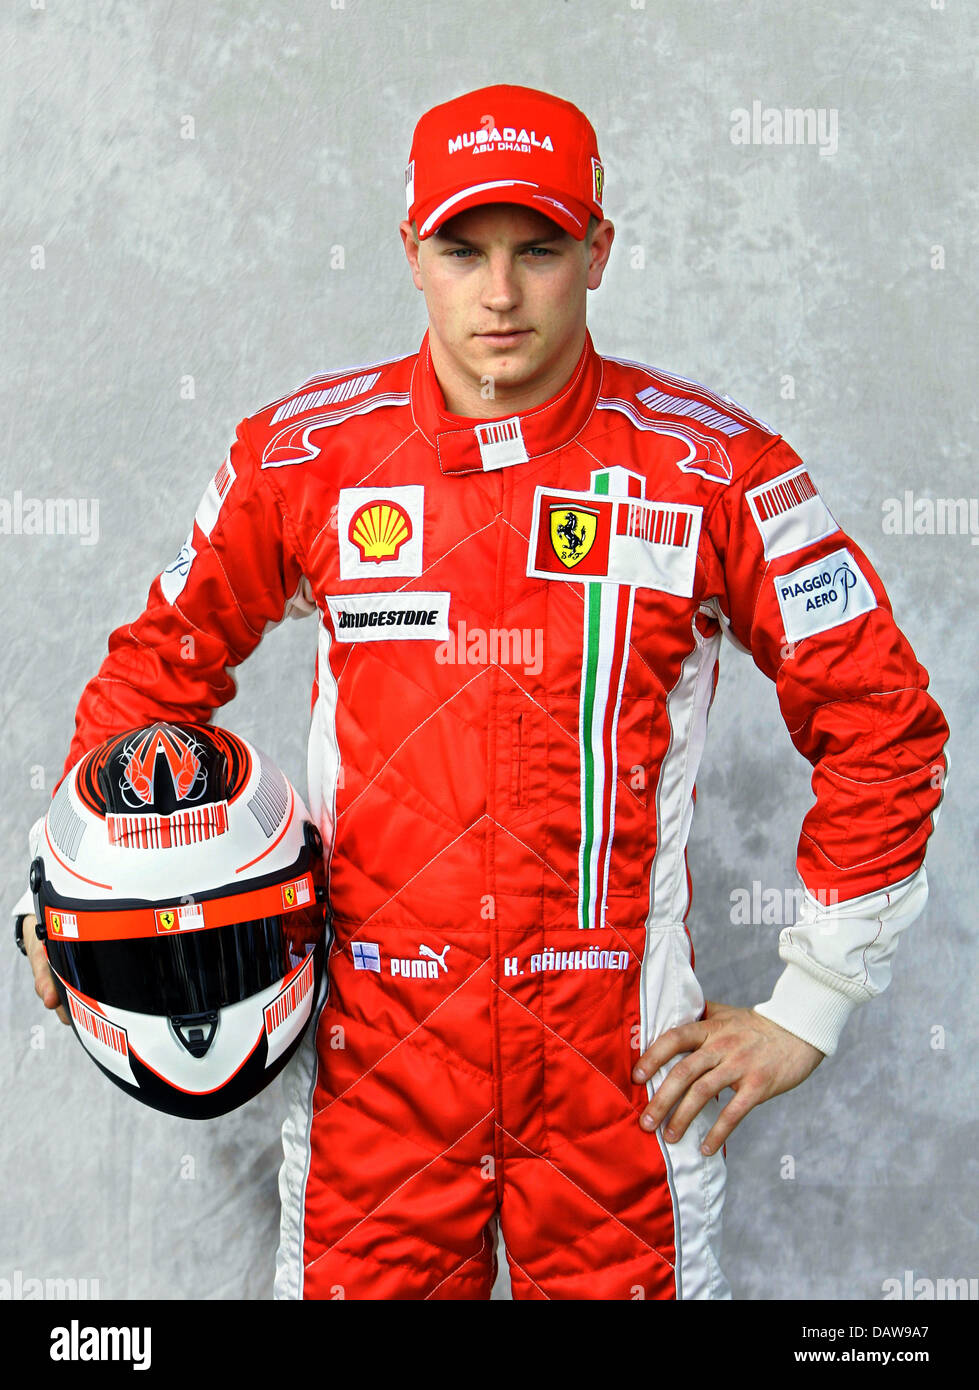 Finnish Formula One pilot Kimi Raikkonen of Scuderia Ferrari poses for ...